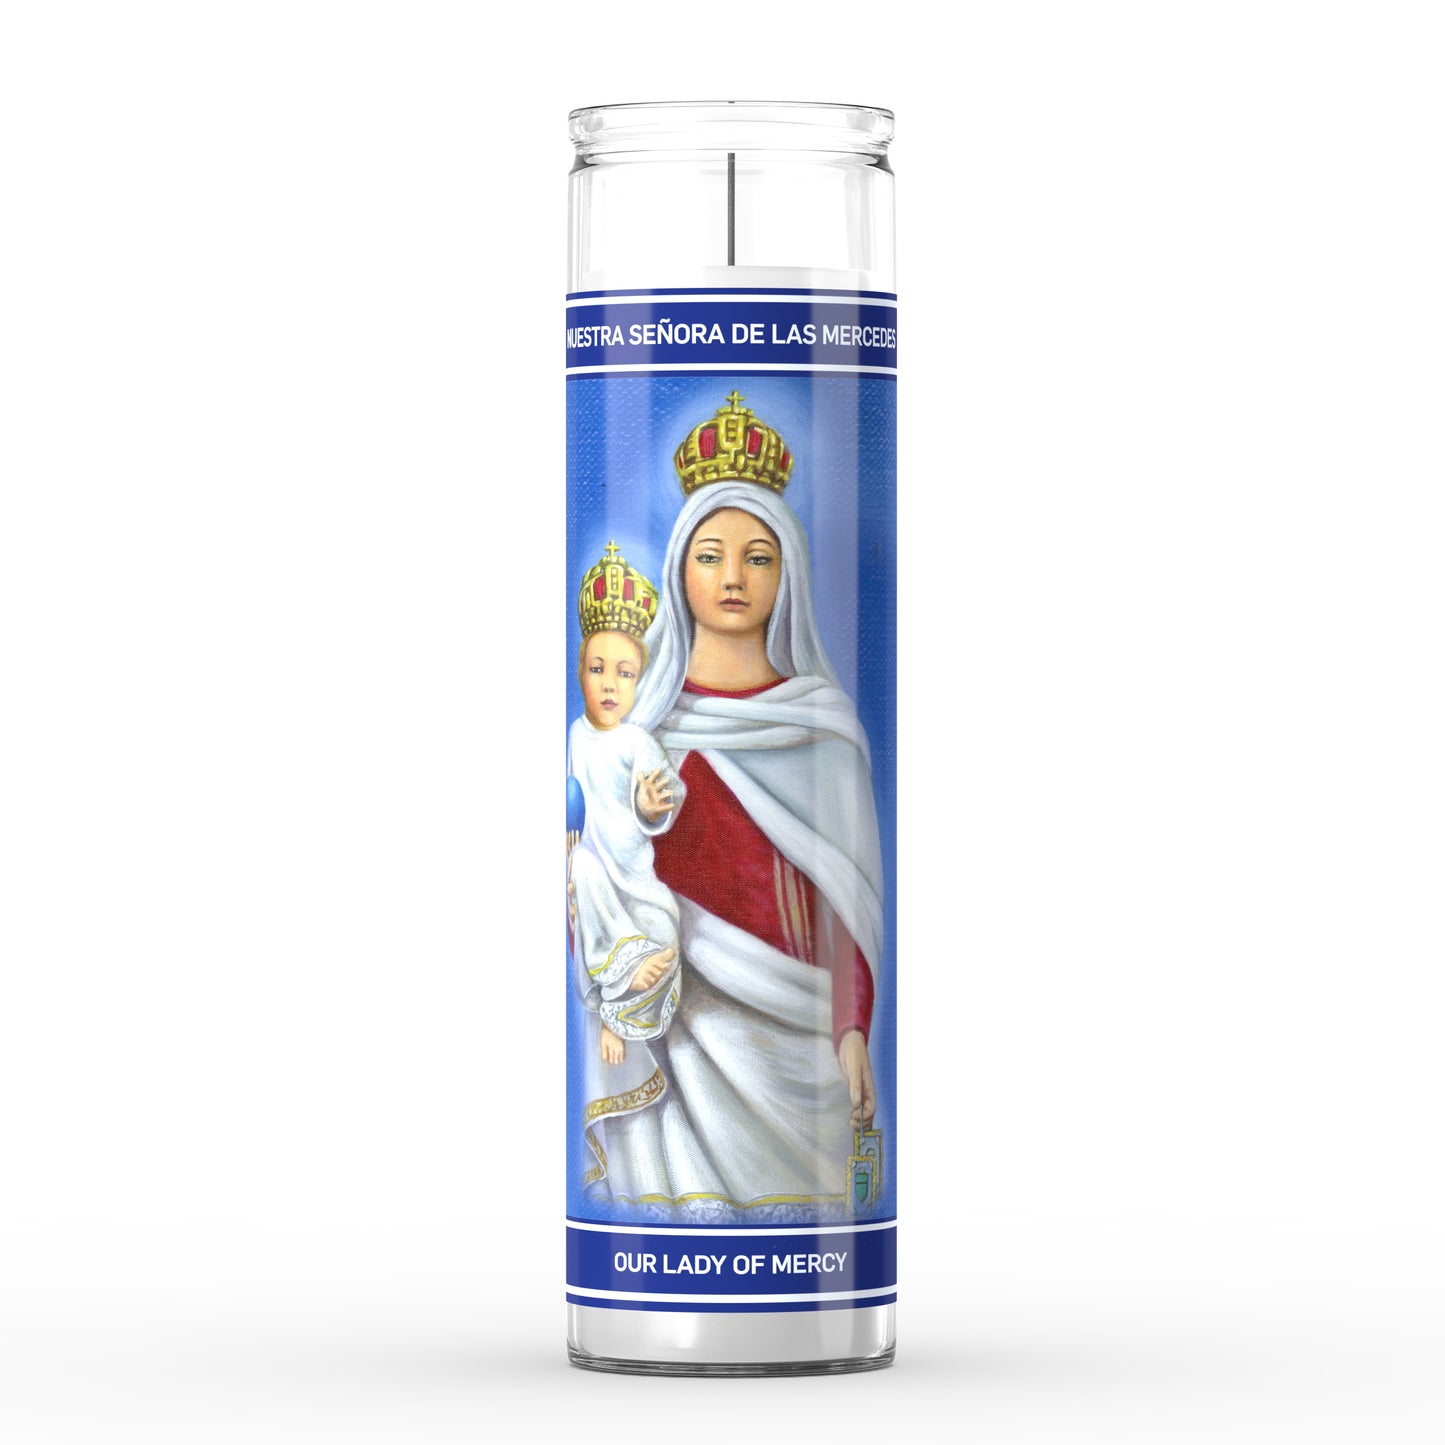 400mL Magic Light Religious Candle - Saint